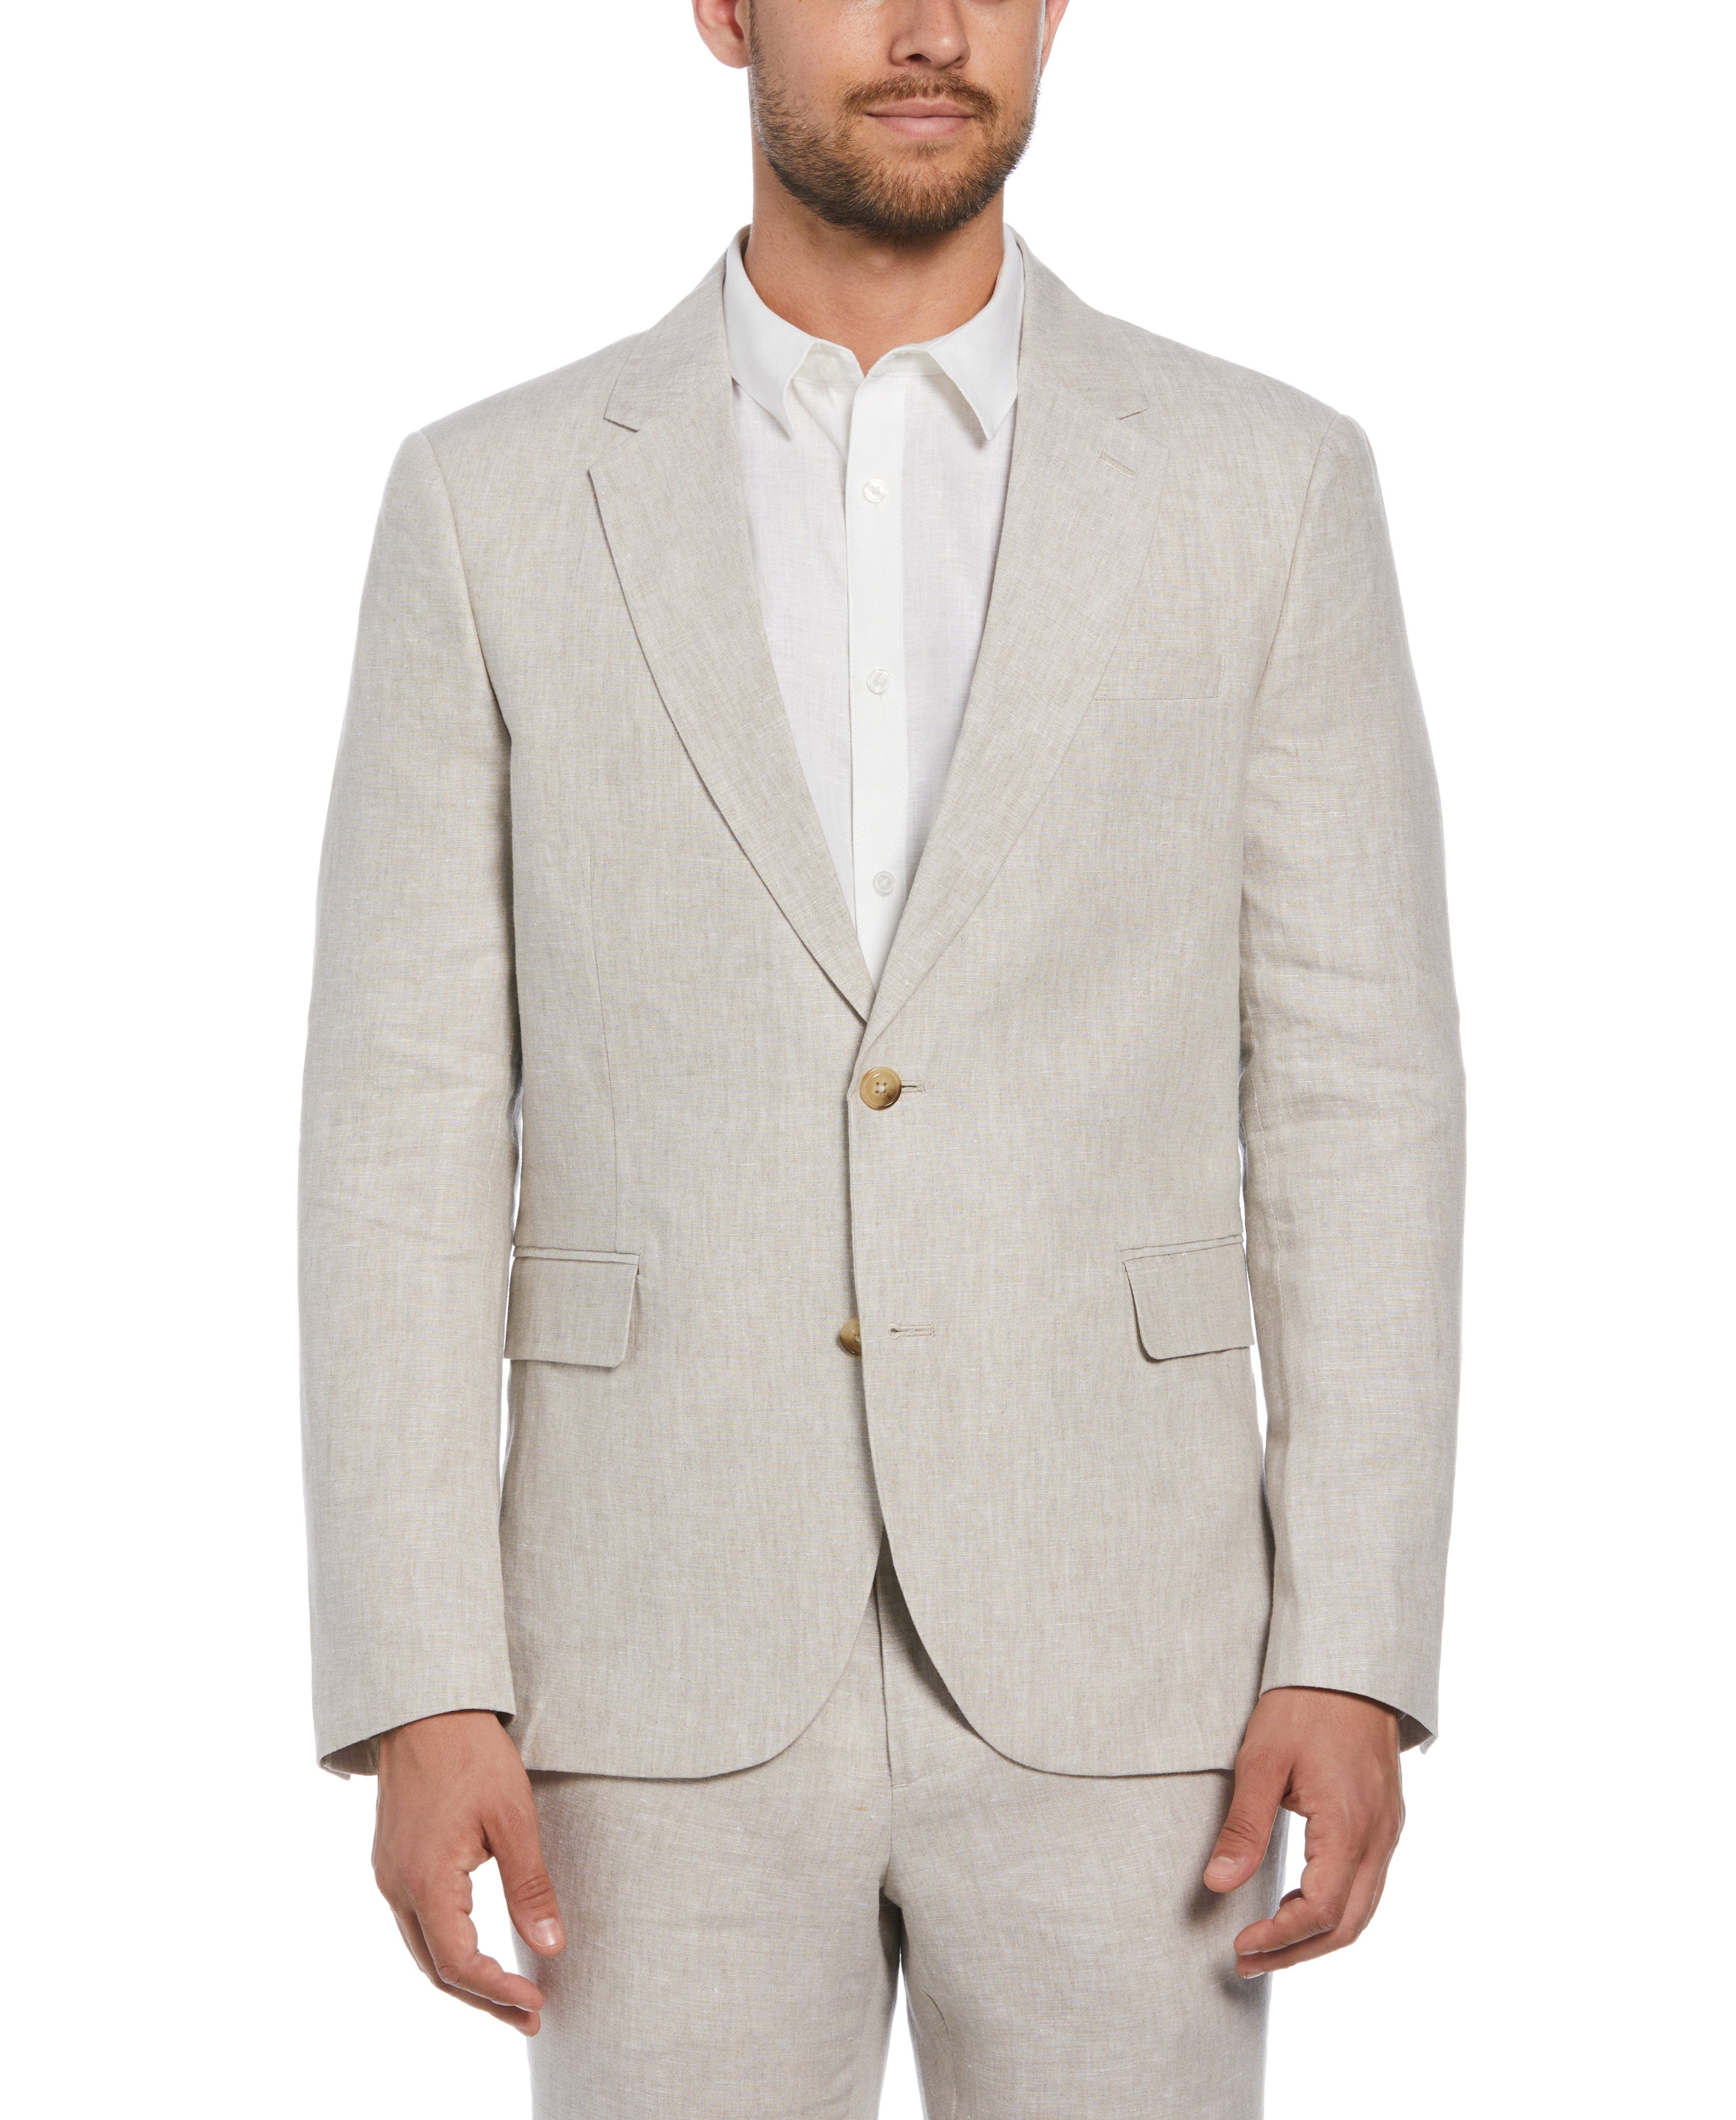 Cubavera Men's Big and Tall Delave Sport Coat in Natural Linen White, Size 3XLT, 100% Linen